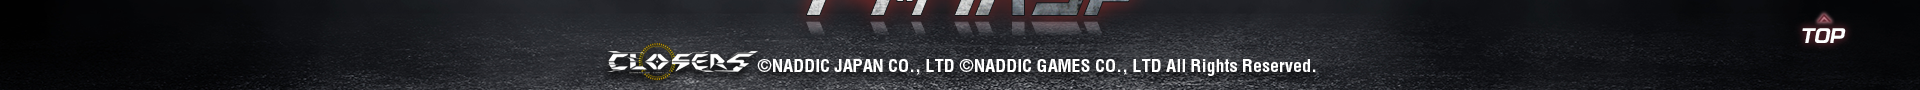 Naddic Japan Co.,Ltd Naddic Games Co.,Ltd All rights reserved.